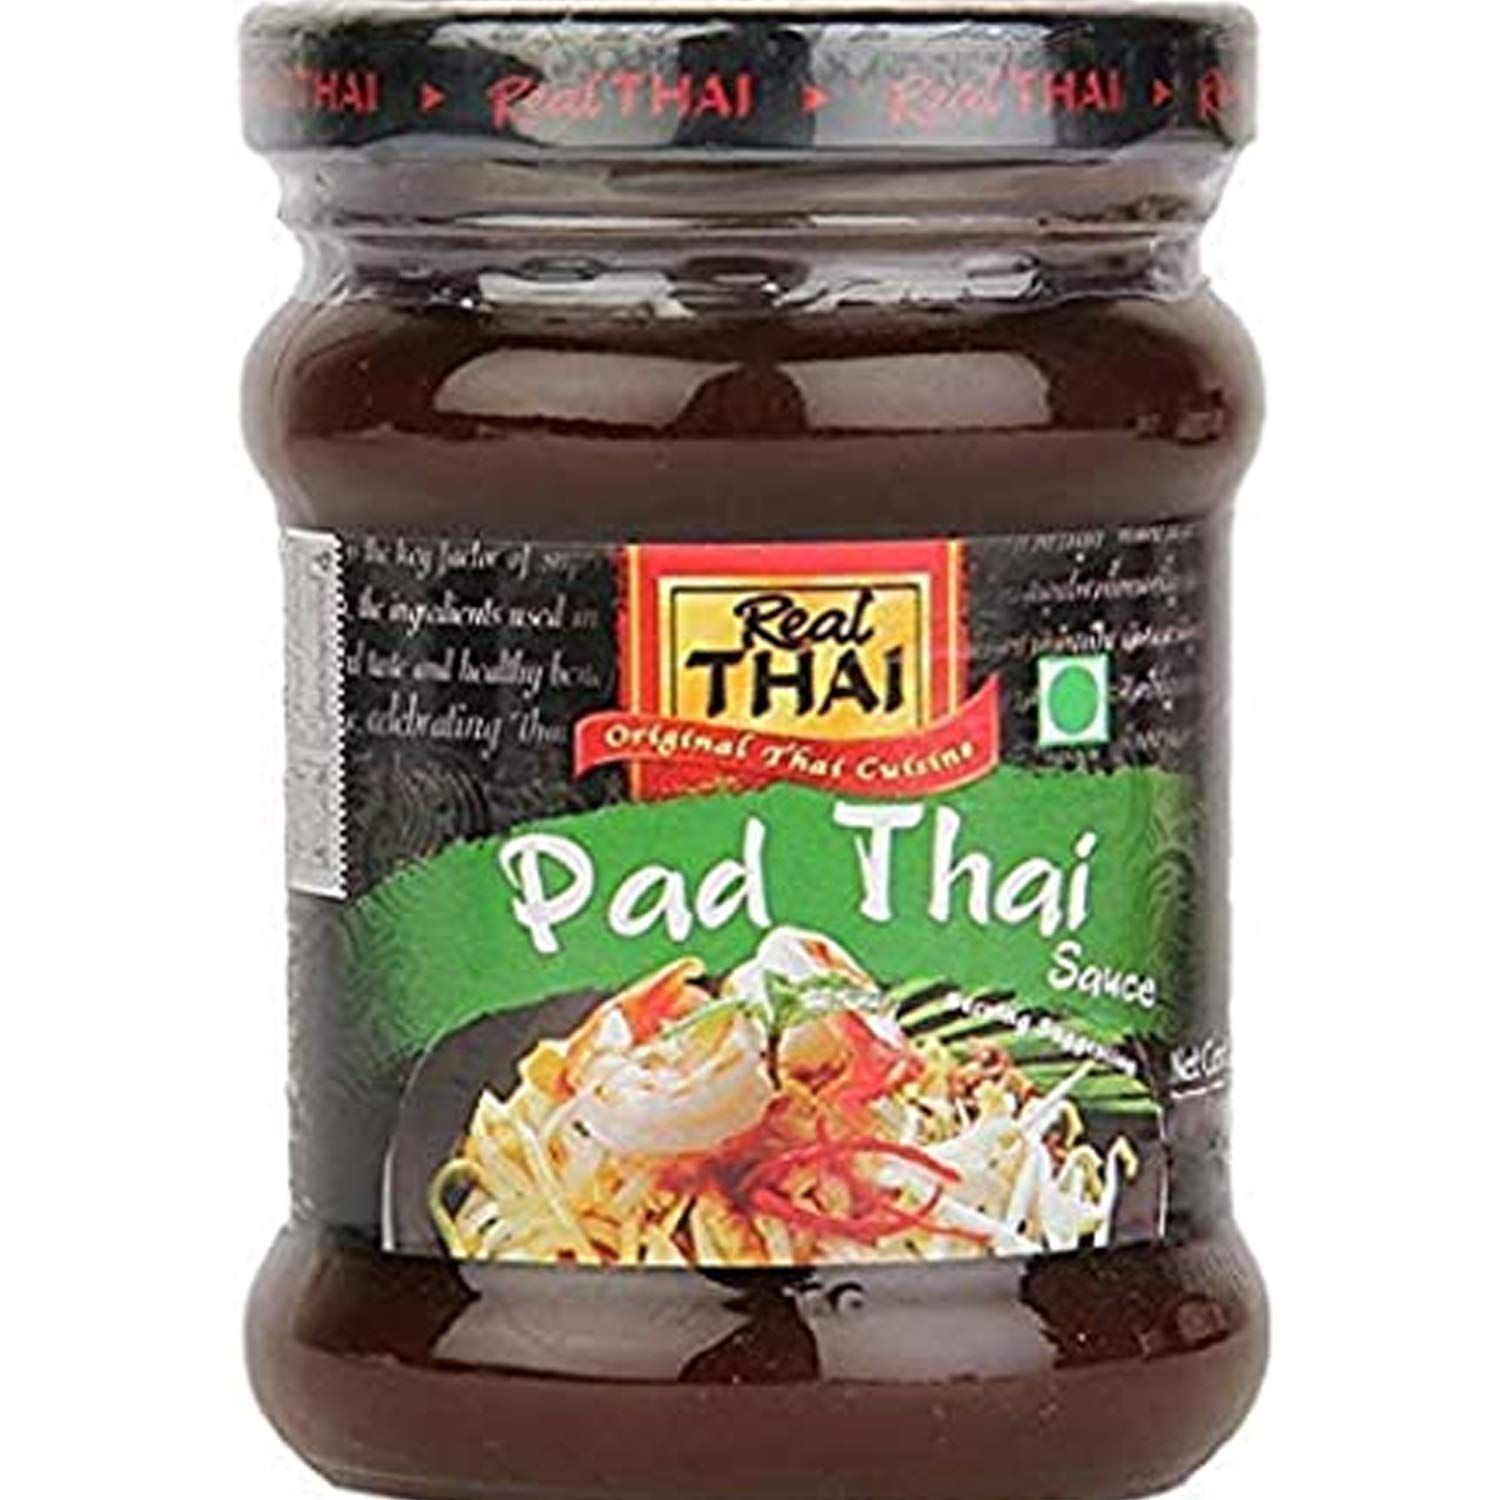 Real Thai Pad Thai Sauce Image